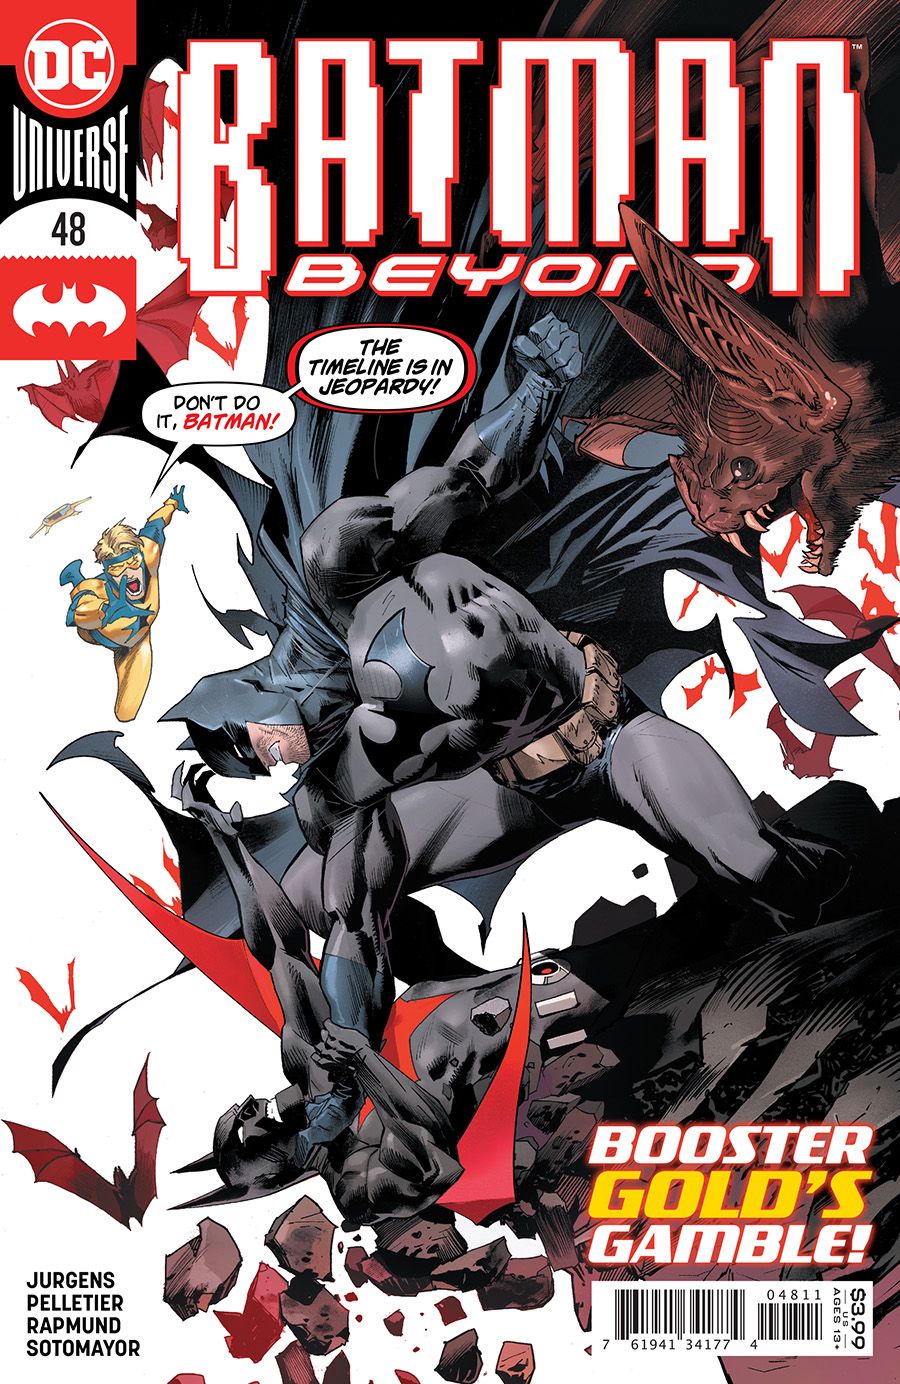 2020 1ST PRINTING FRANCIS MANAPUL VARIANT COVER DC UNIVERSE BATMAN BEYOND #47 